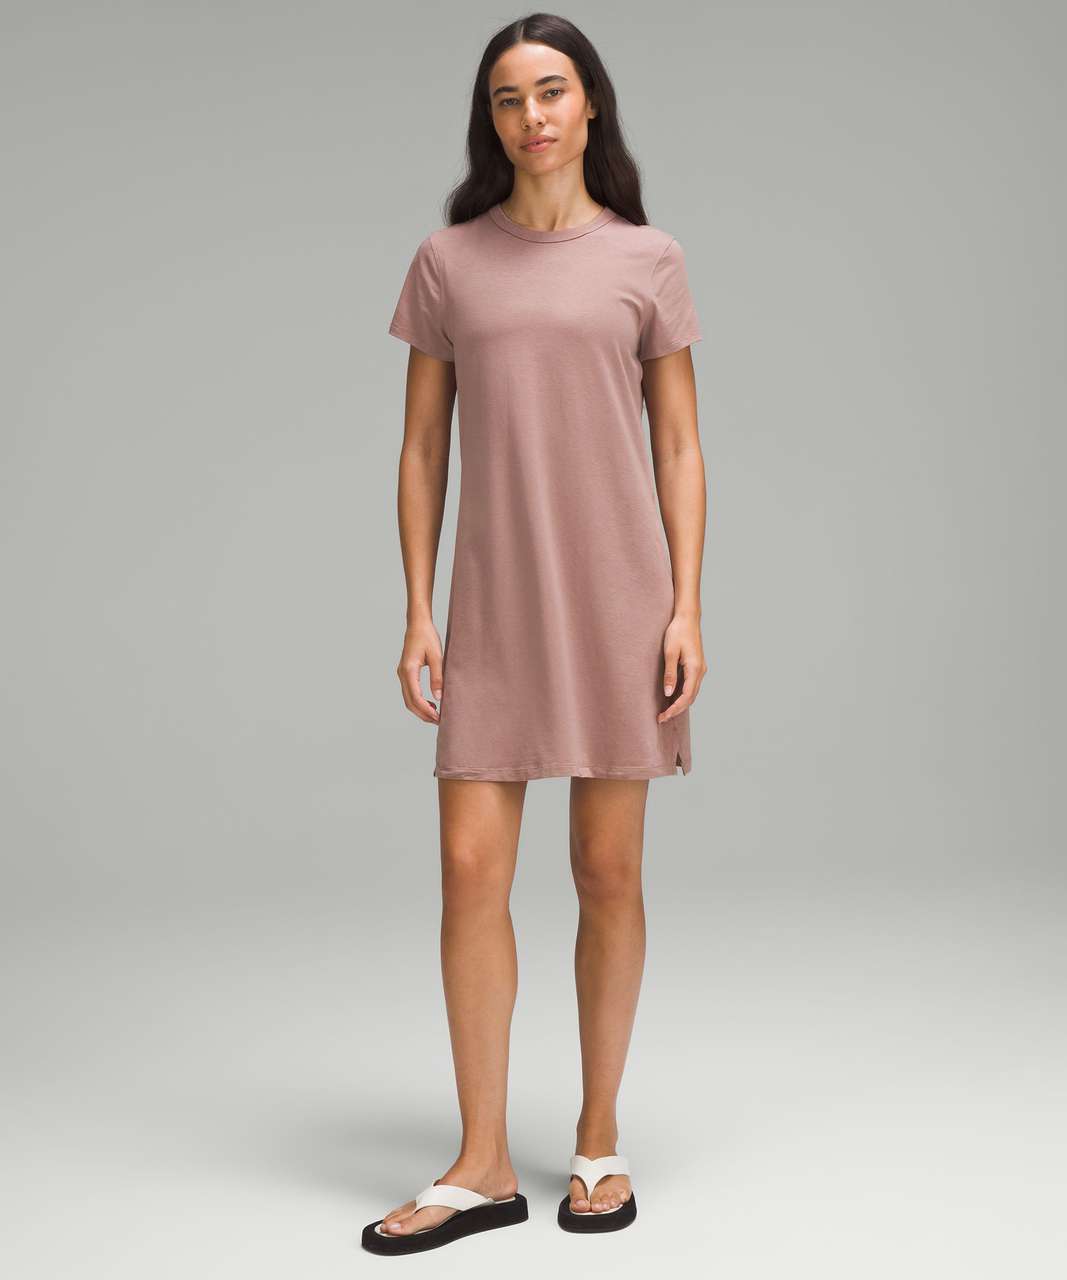 Lululemon Classic-Fit Cotton-Blend T-Shirt Dress - Twilight Rose